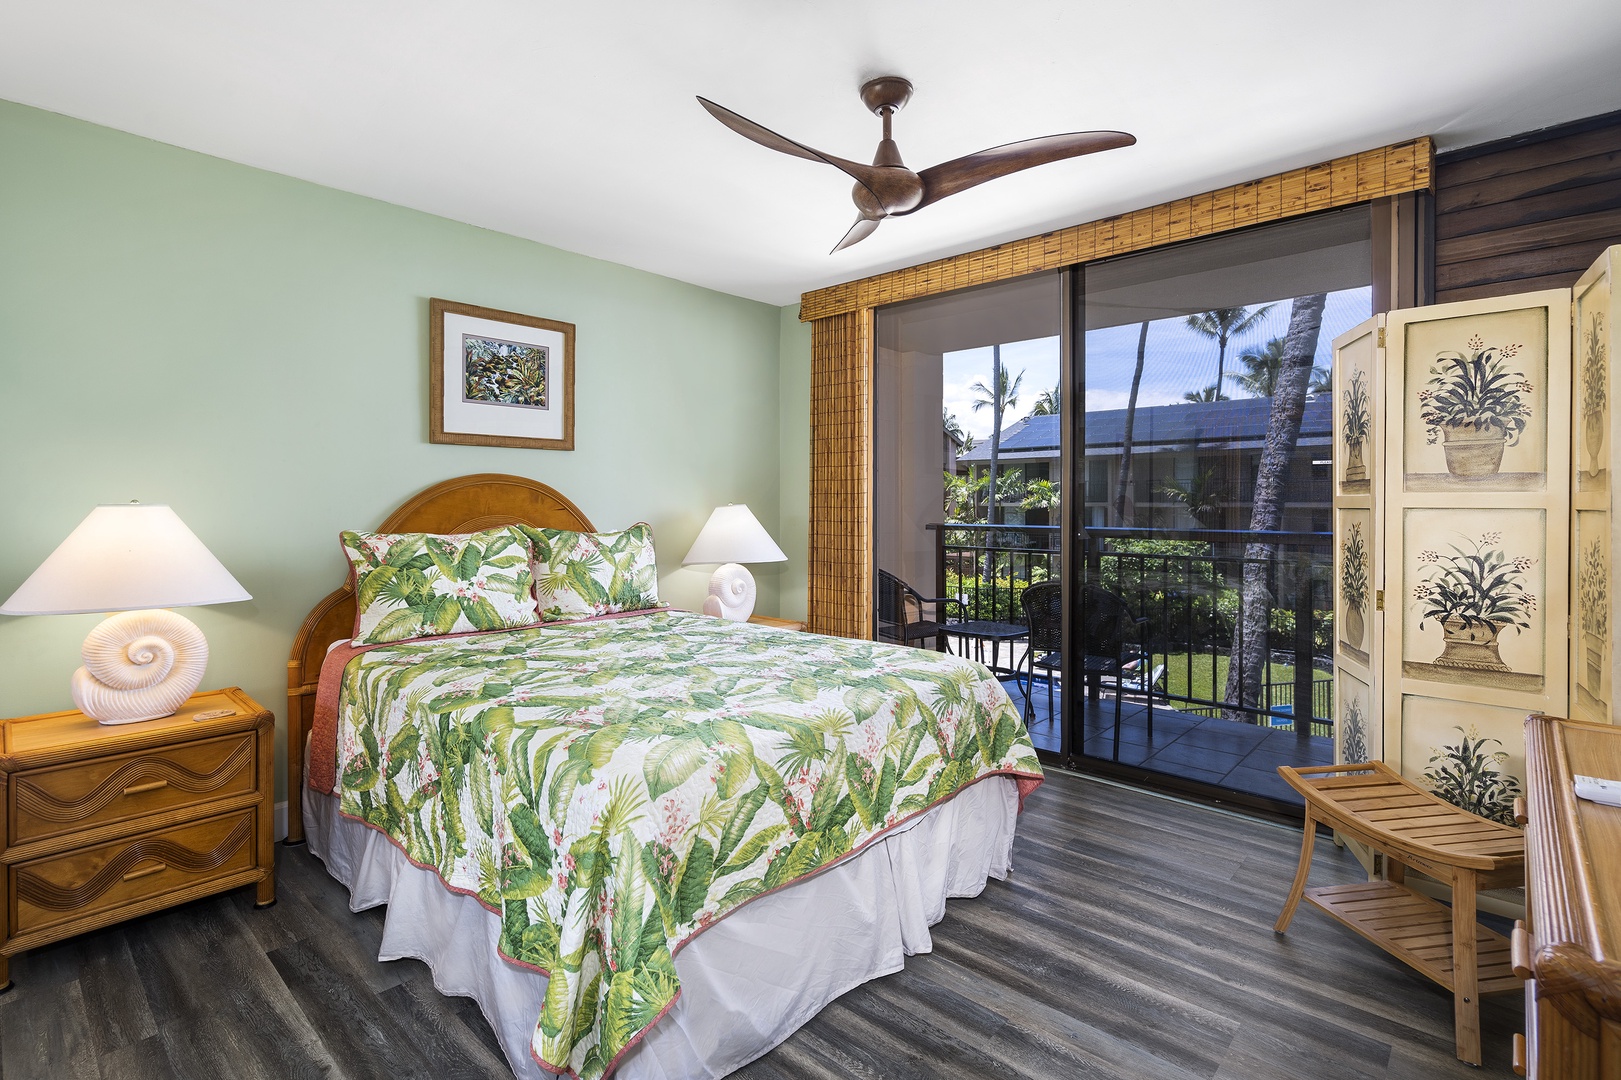 Kailua Kona Vacation Rentals, Kona Makai 6201 - Queen bed equipped guest bedroom